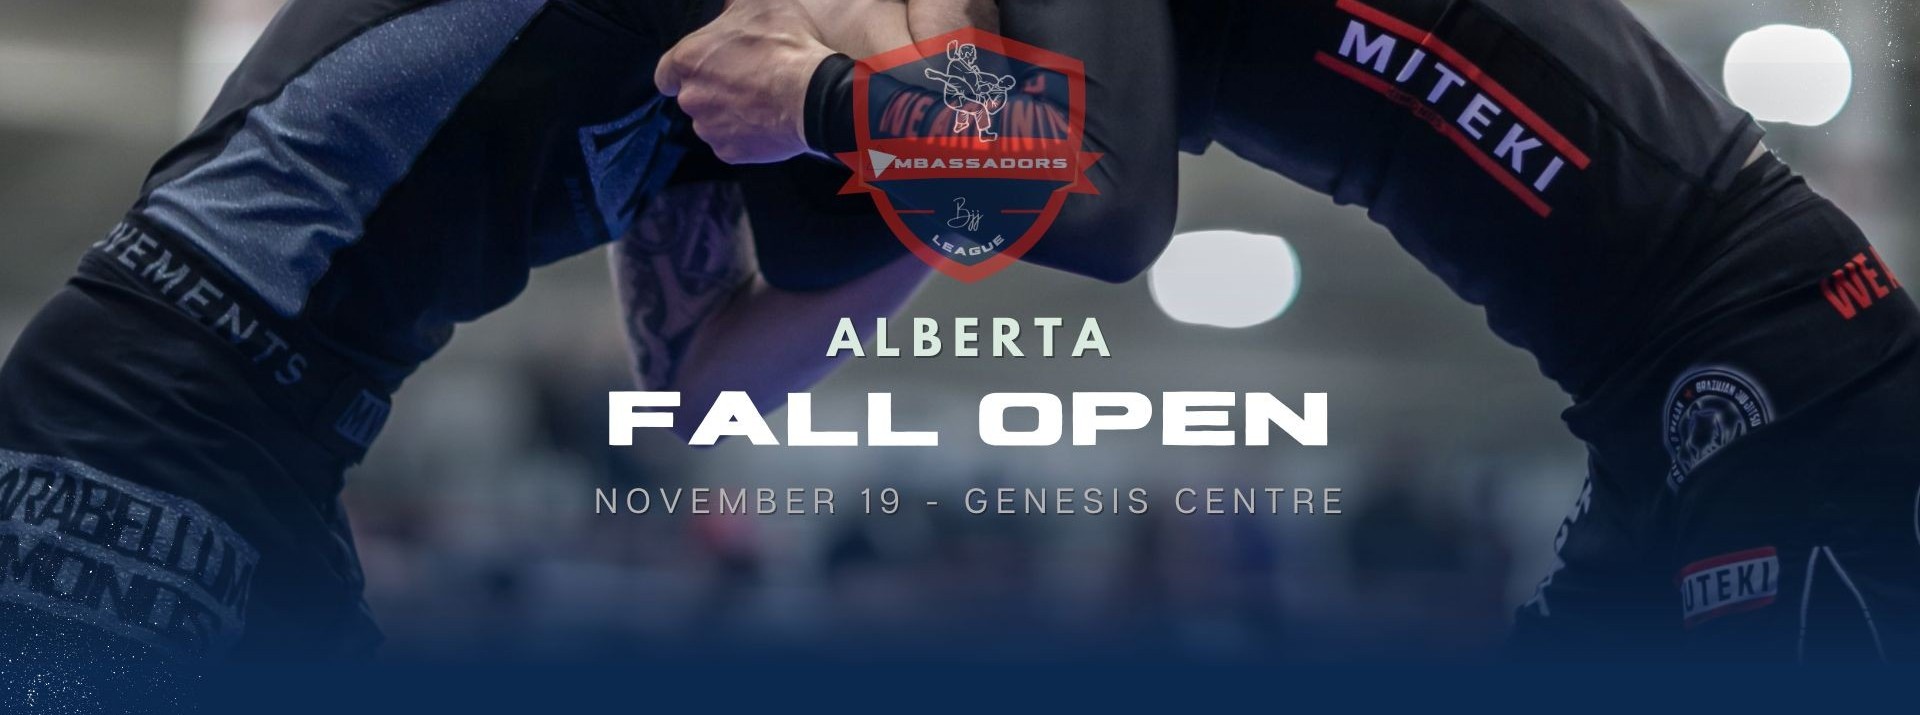 Alberta Fall Open - Ambassadors BJJ League - Smoothcomp